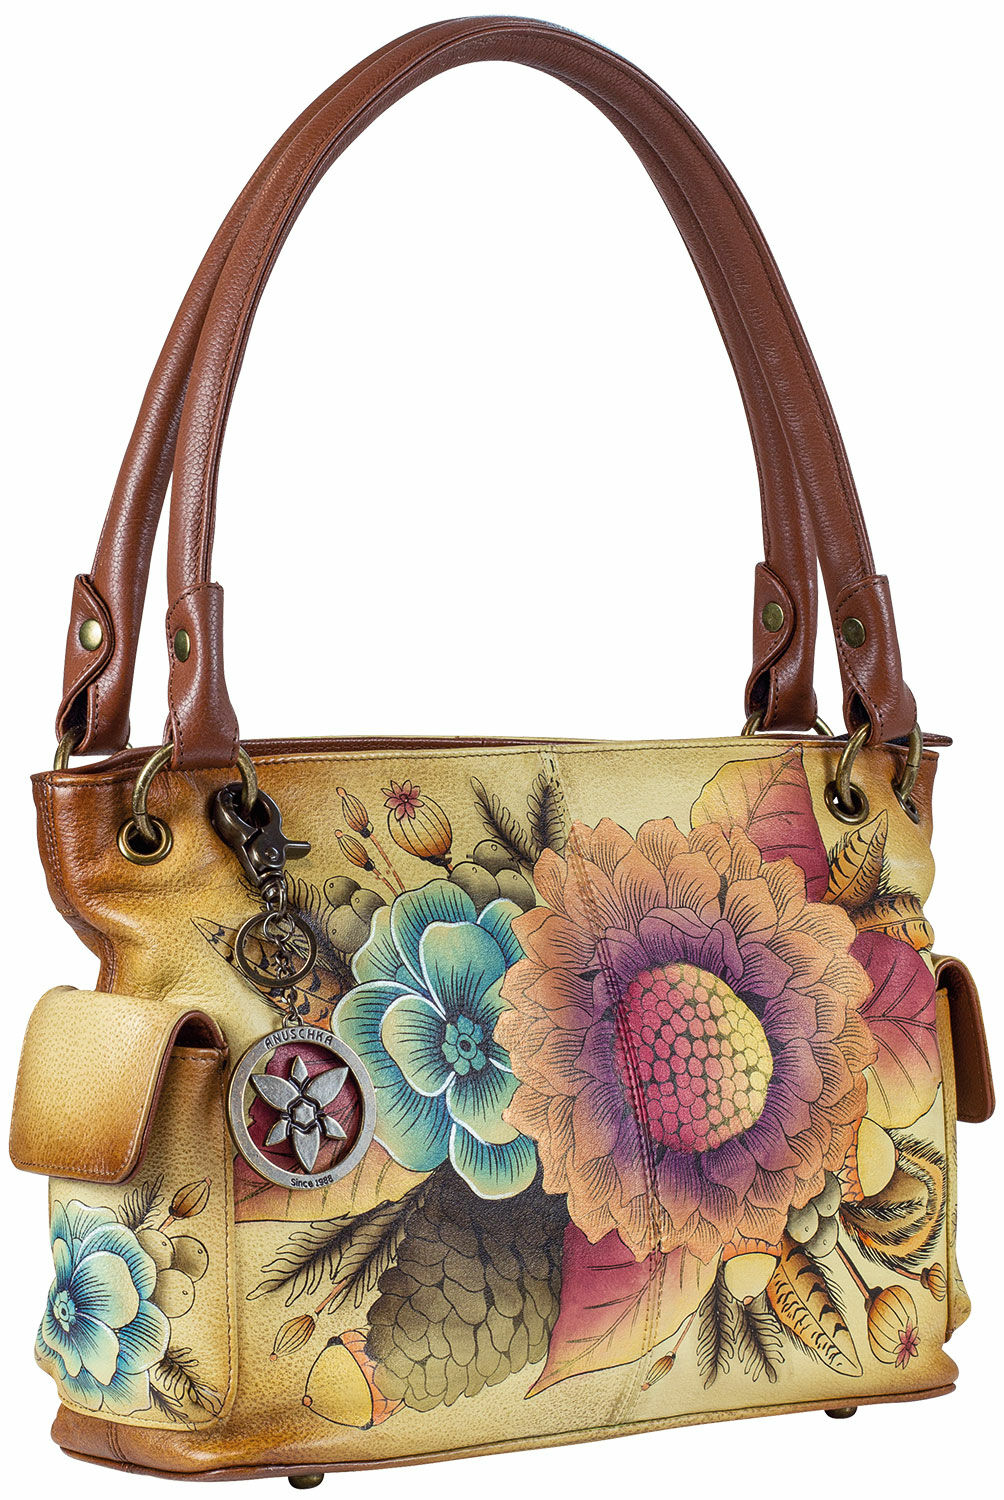 Handbag "Flowers" by the brand Anuschka®